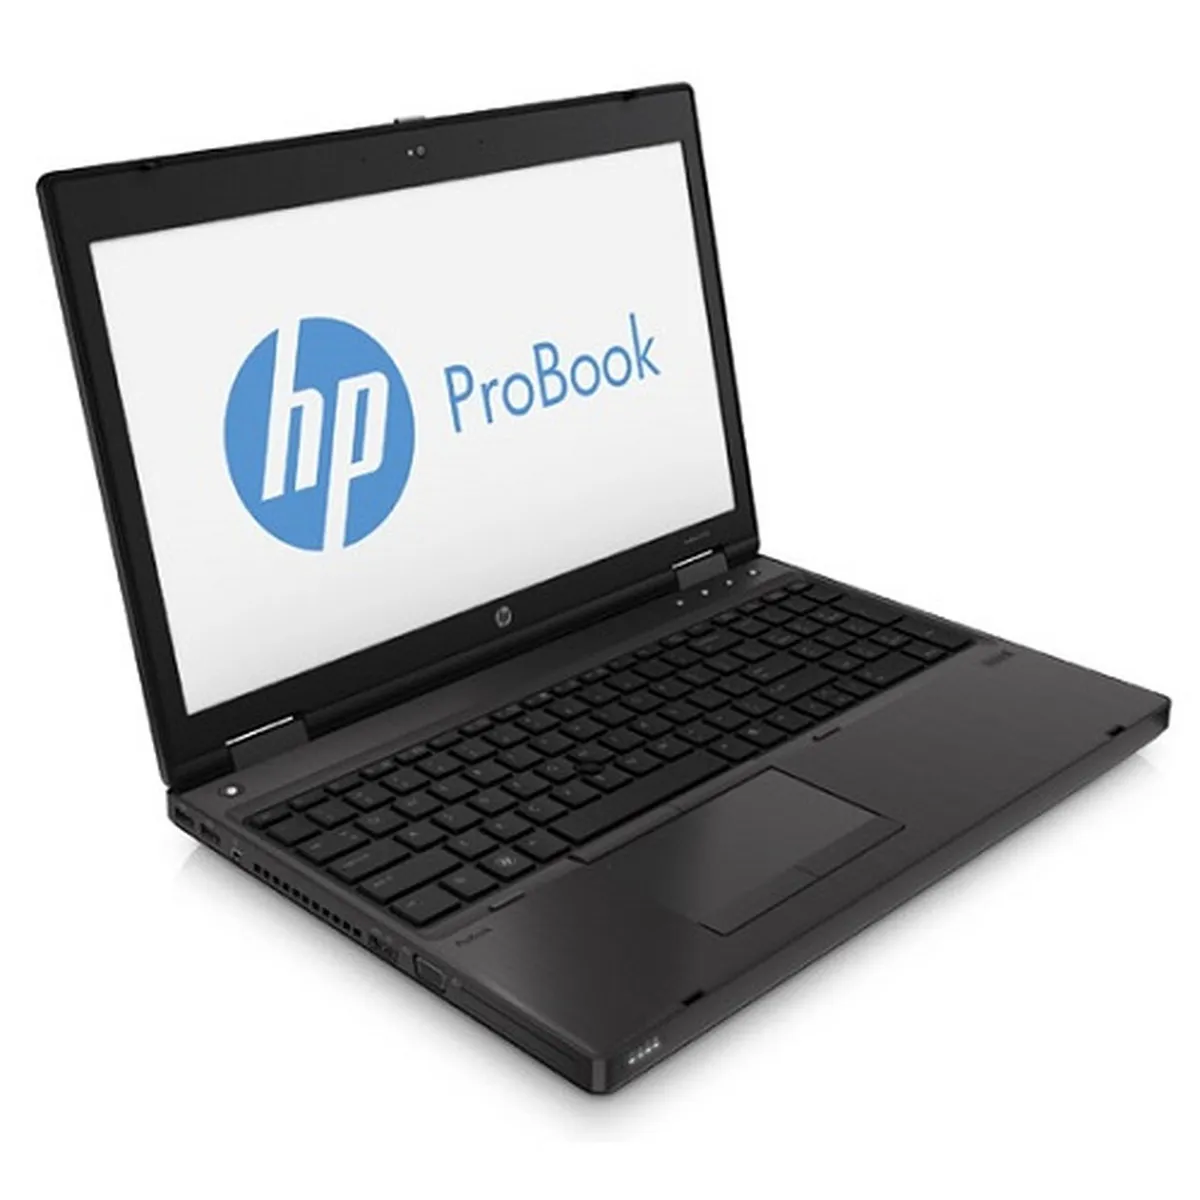 ProBook 6570b Notebook PC